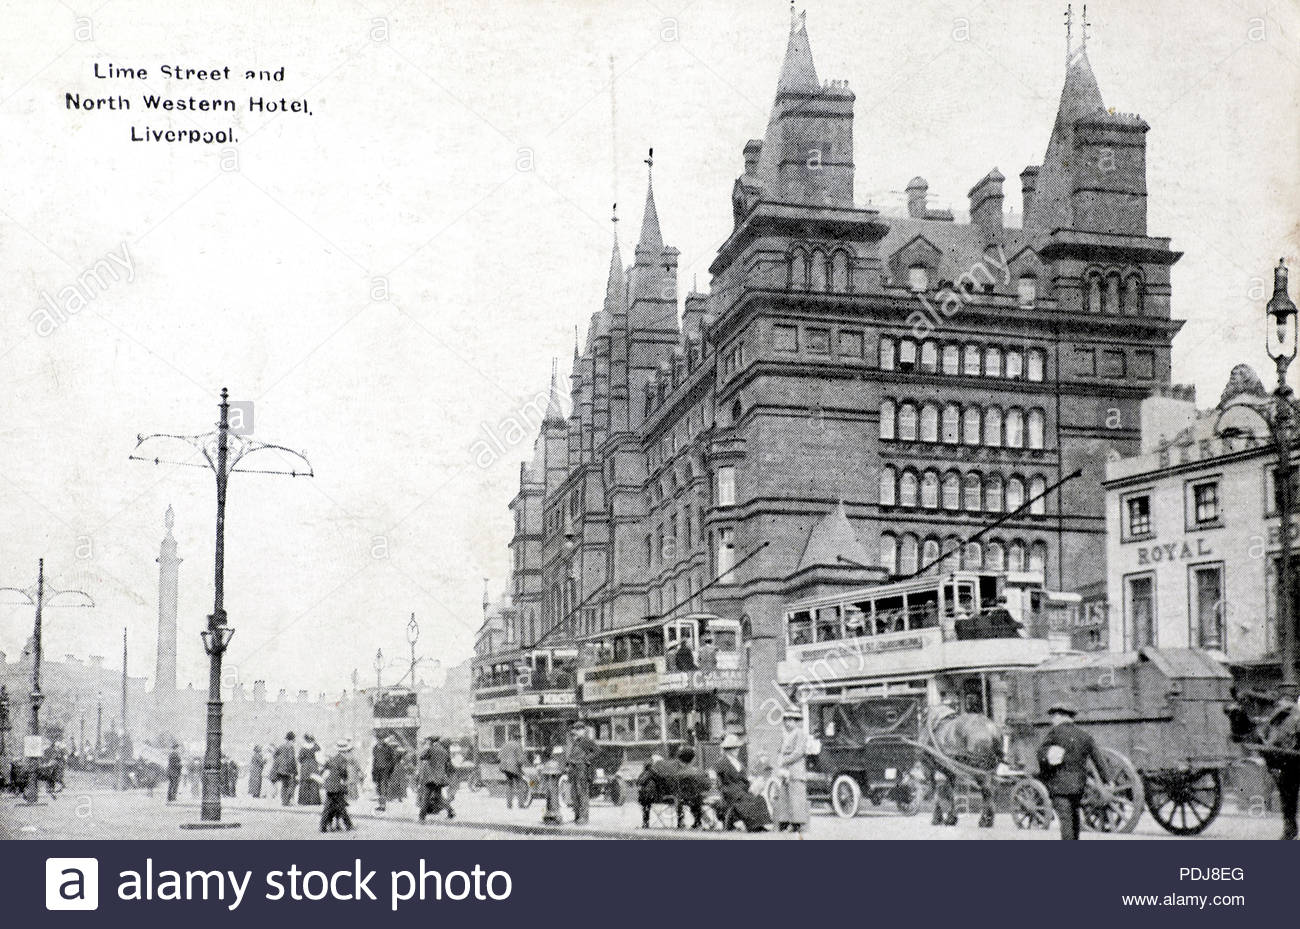 Lime Street e North Western Hotel, Liverpool, vintage cartolina dal 1906 Foto Stock